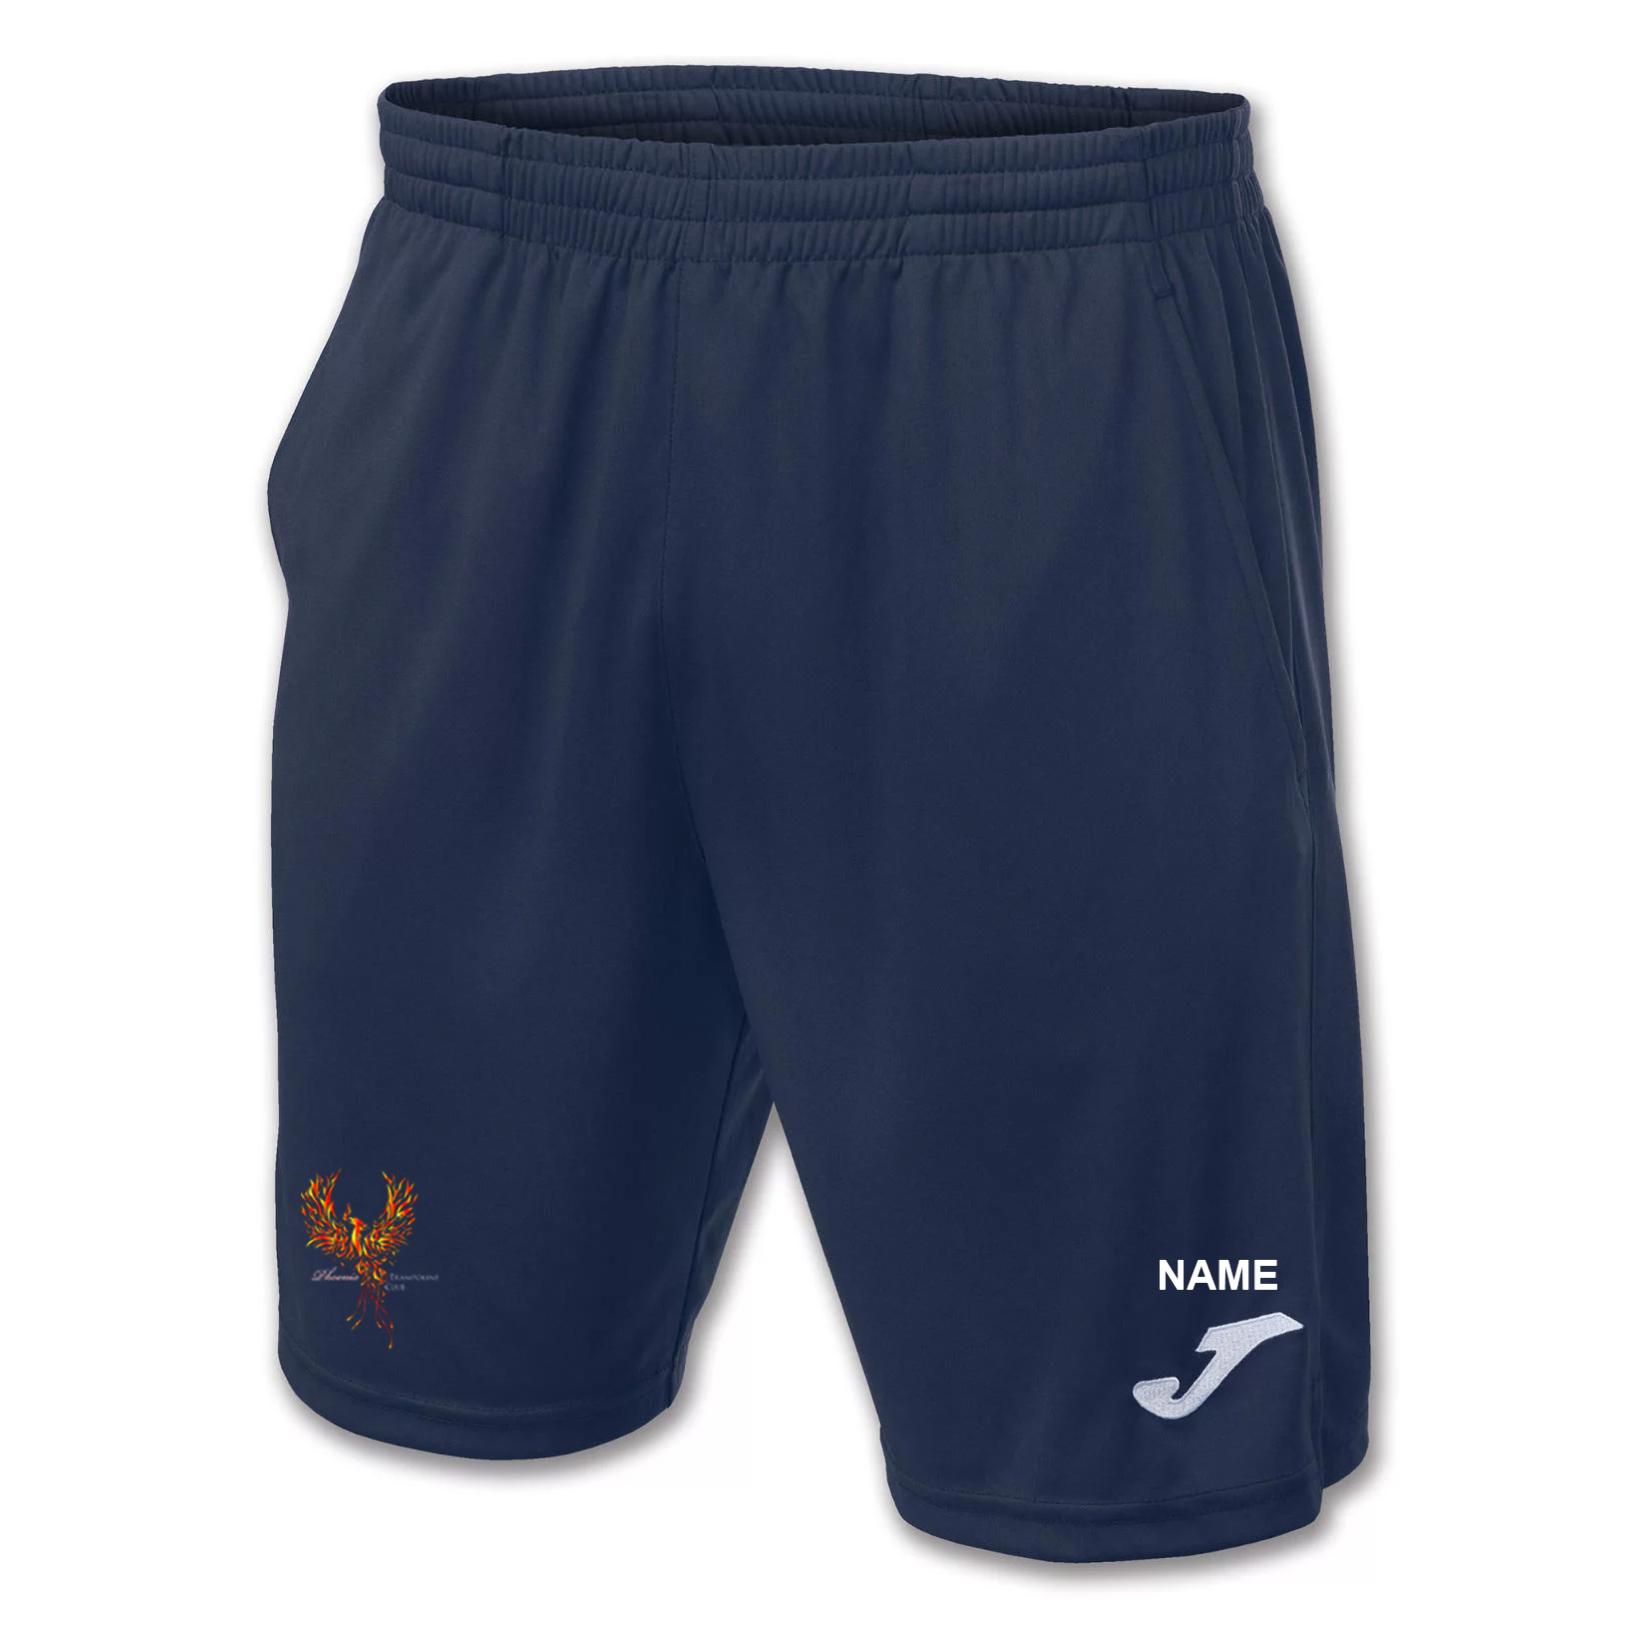 Joma Bermuda Drive Shorts